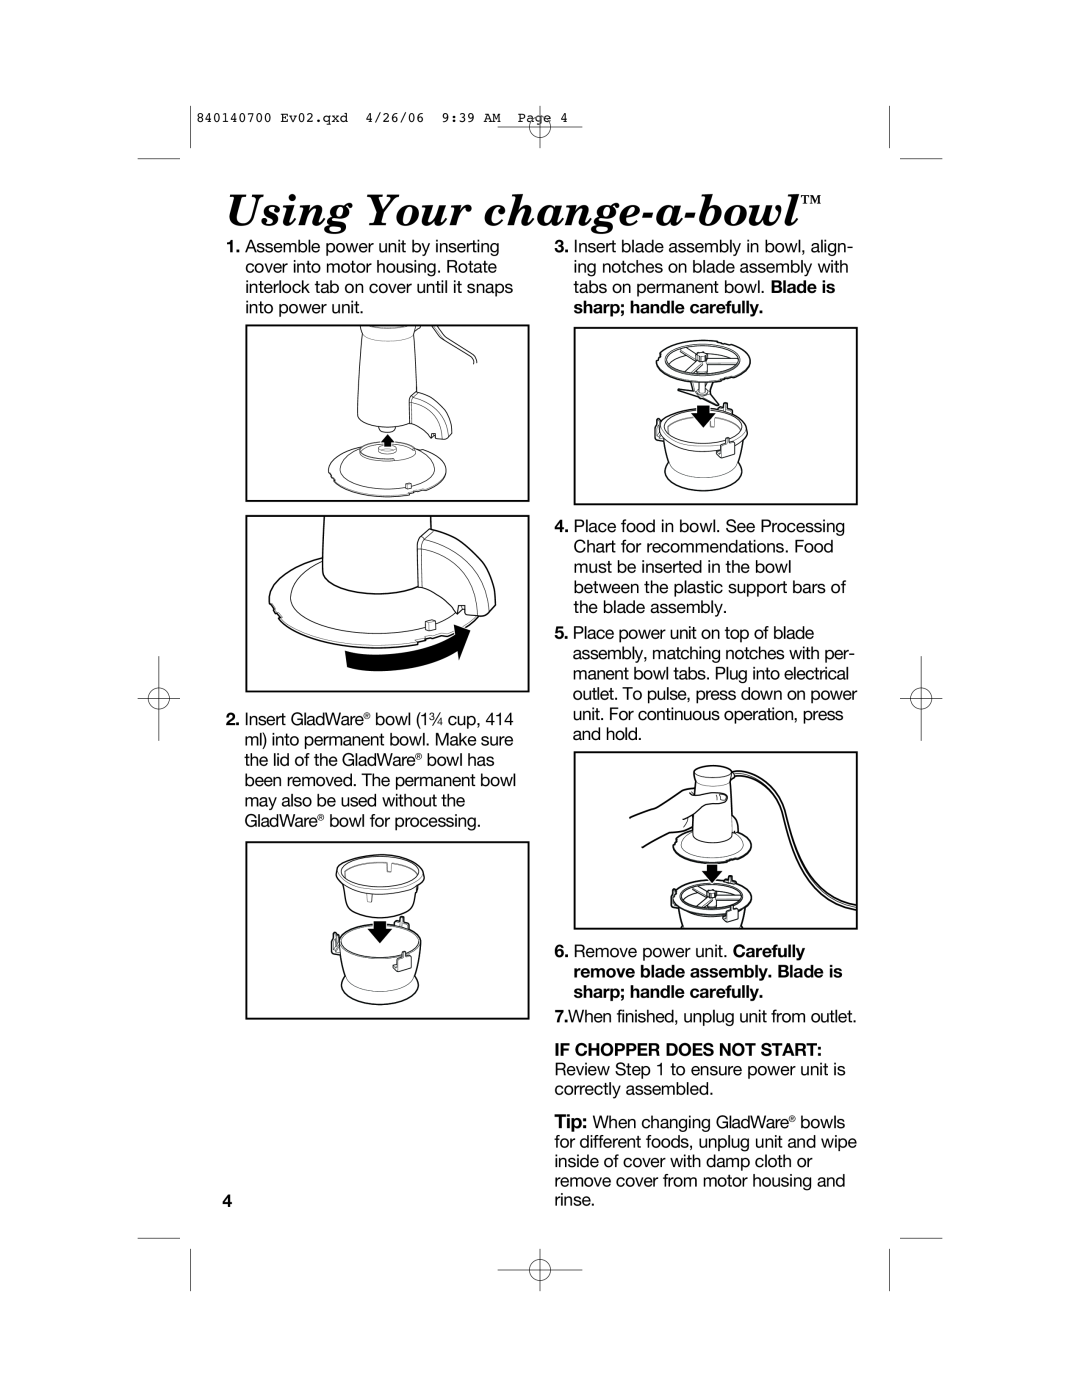 Hamilton Beach 72850 manual Using Your change-a-bowl 